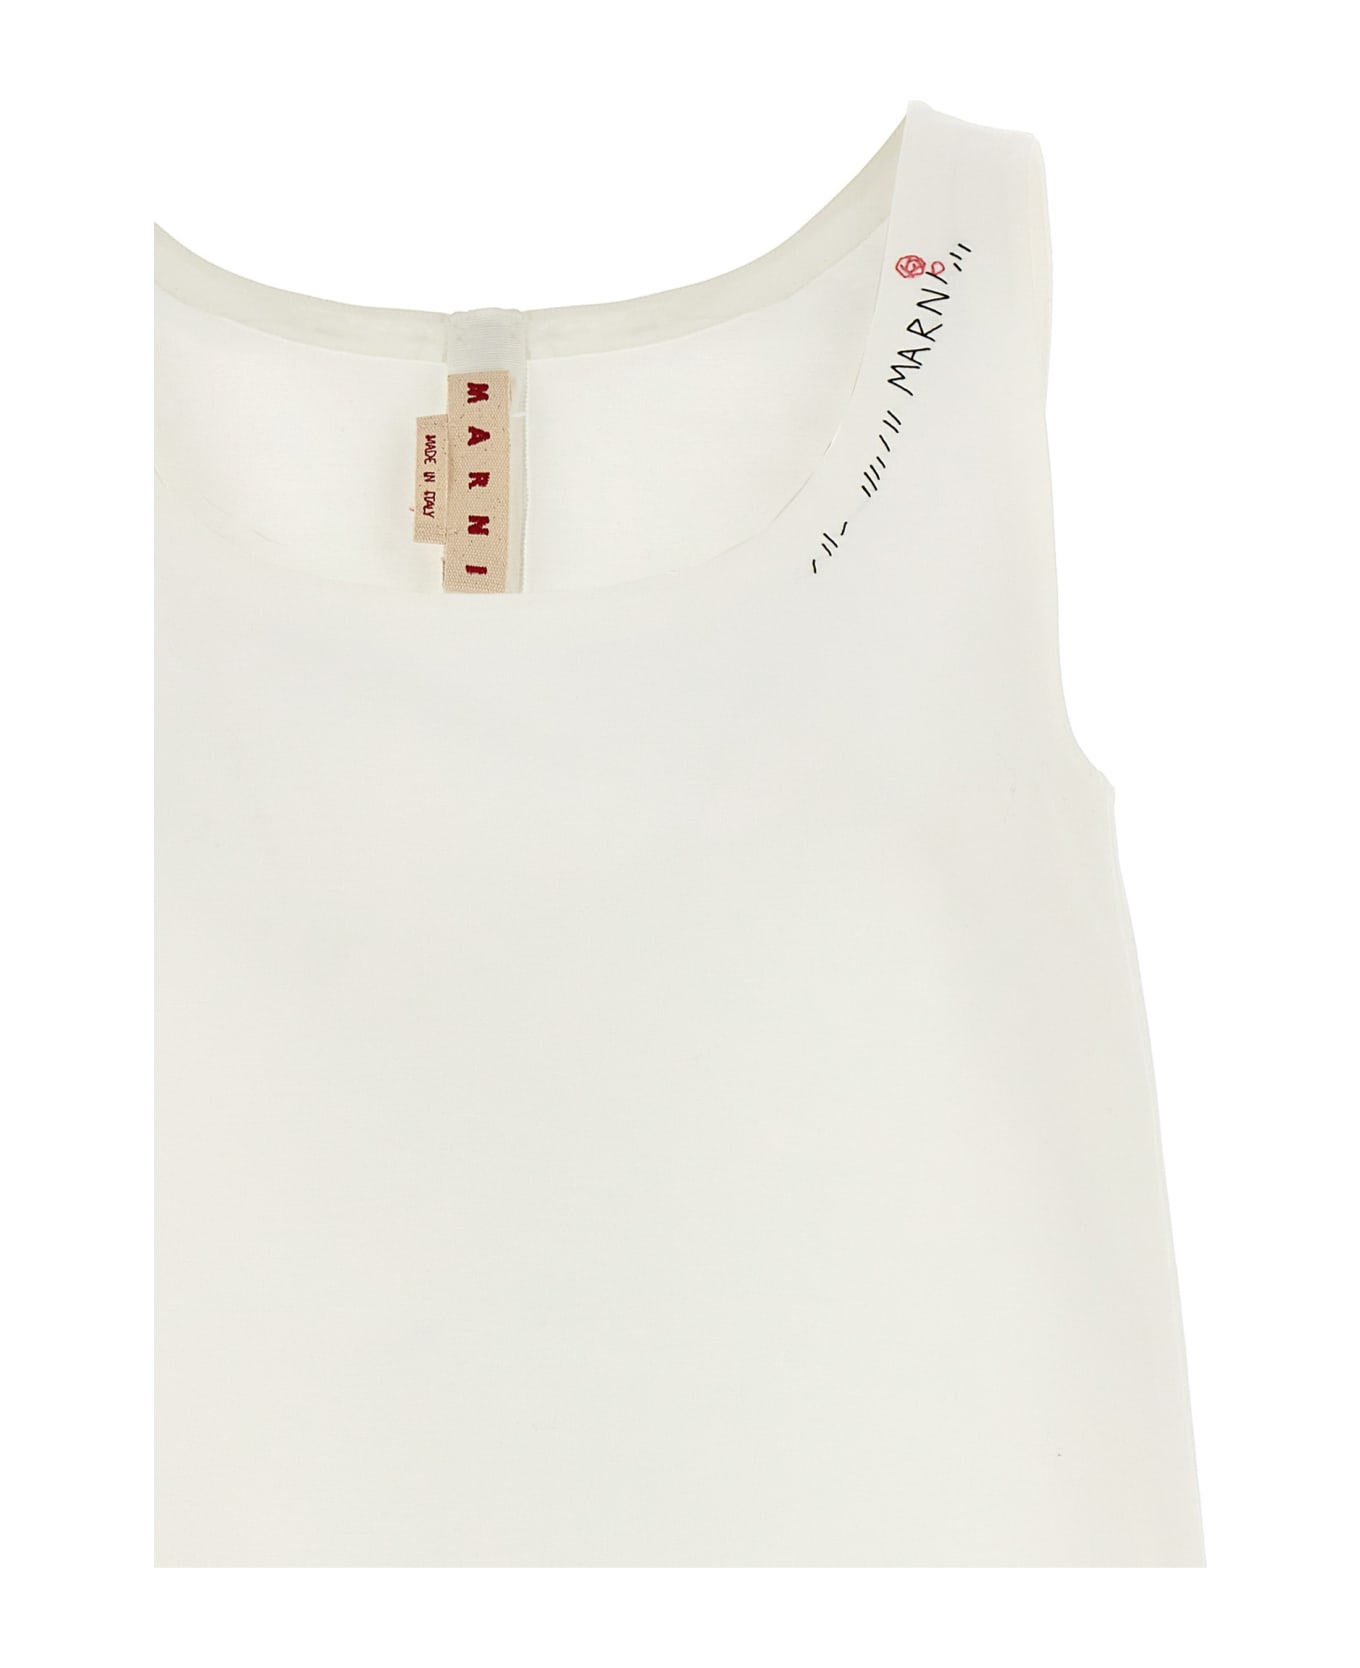 Marni Logo Embroidery Dress - White タンクトップ